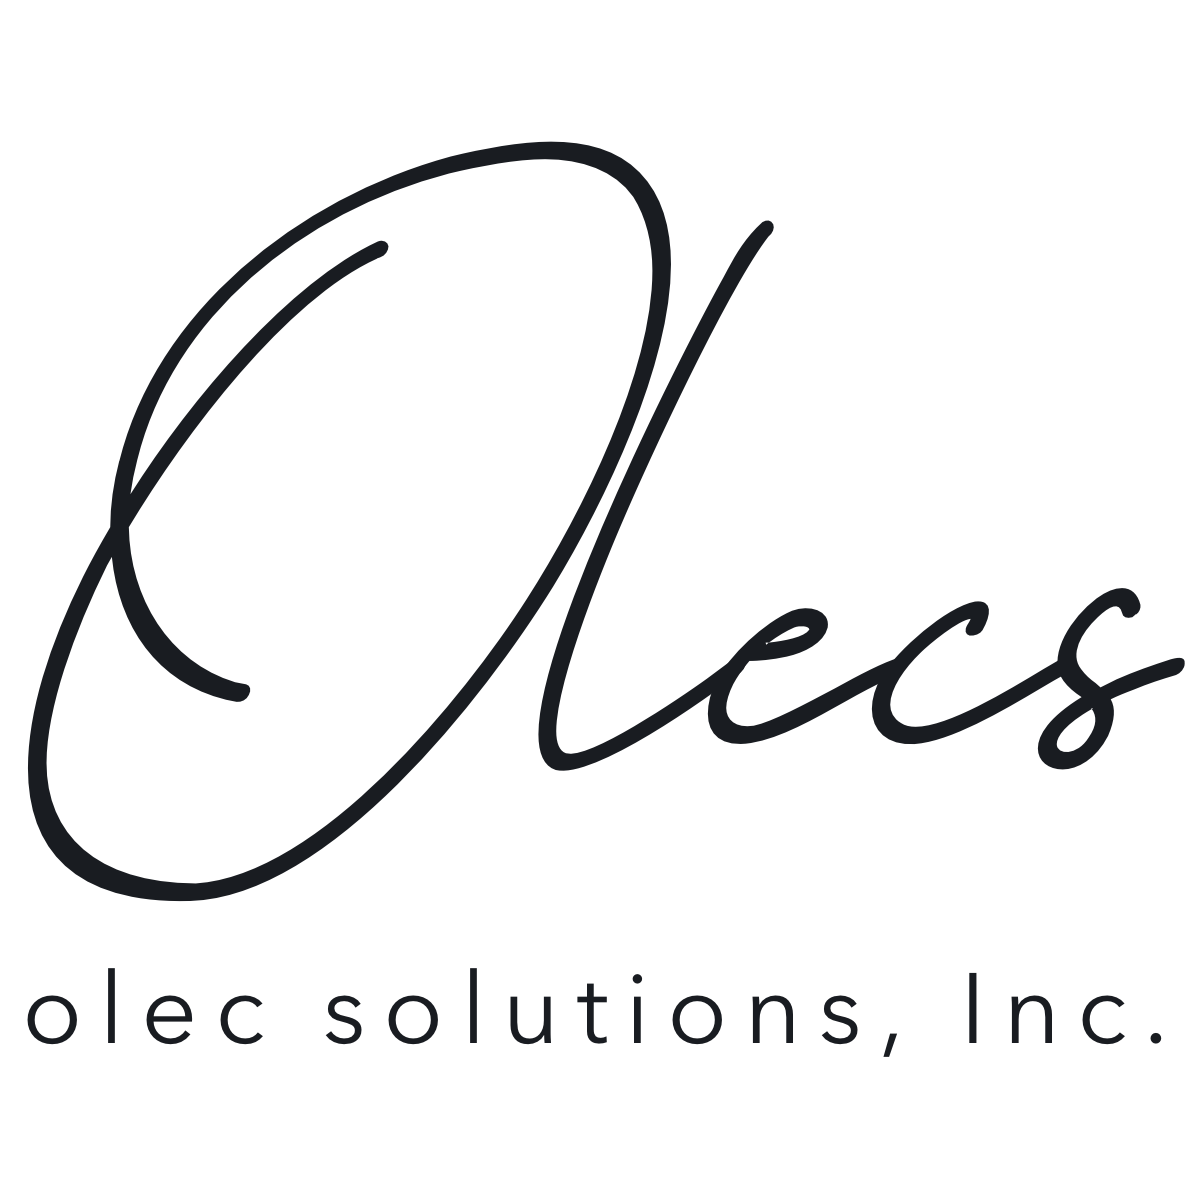 olecs logo .png